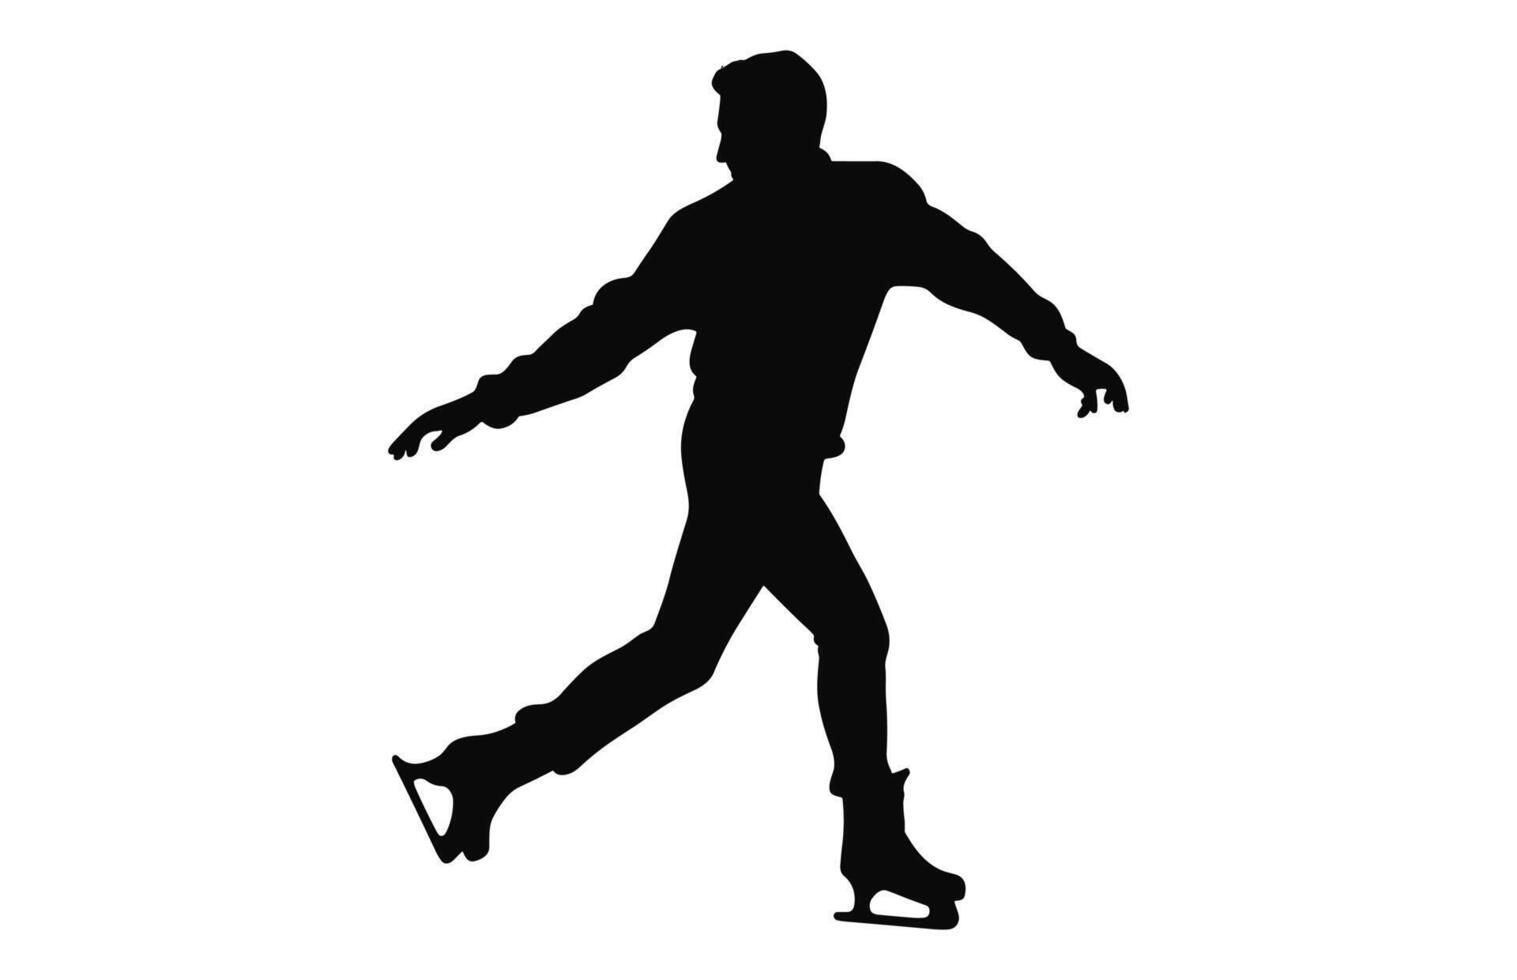 Man Figure Ice Skating Silhouette Vector Bundle, Male Figure Skater Silhouettes black Clipart Set